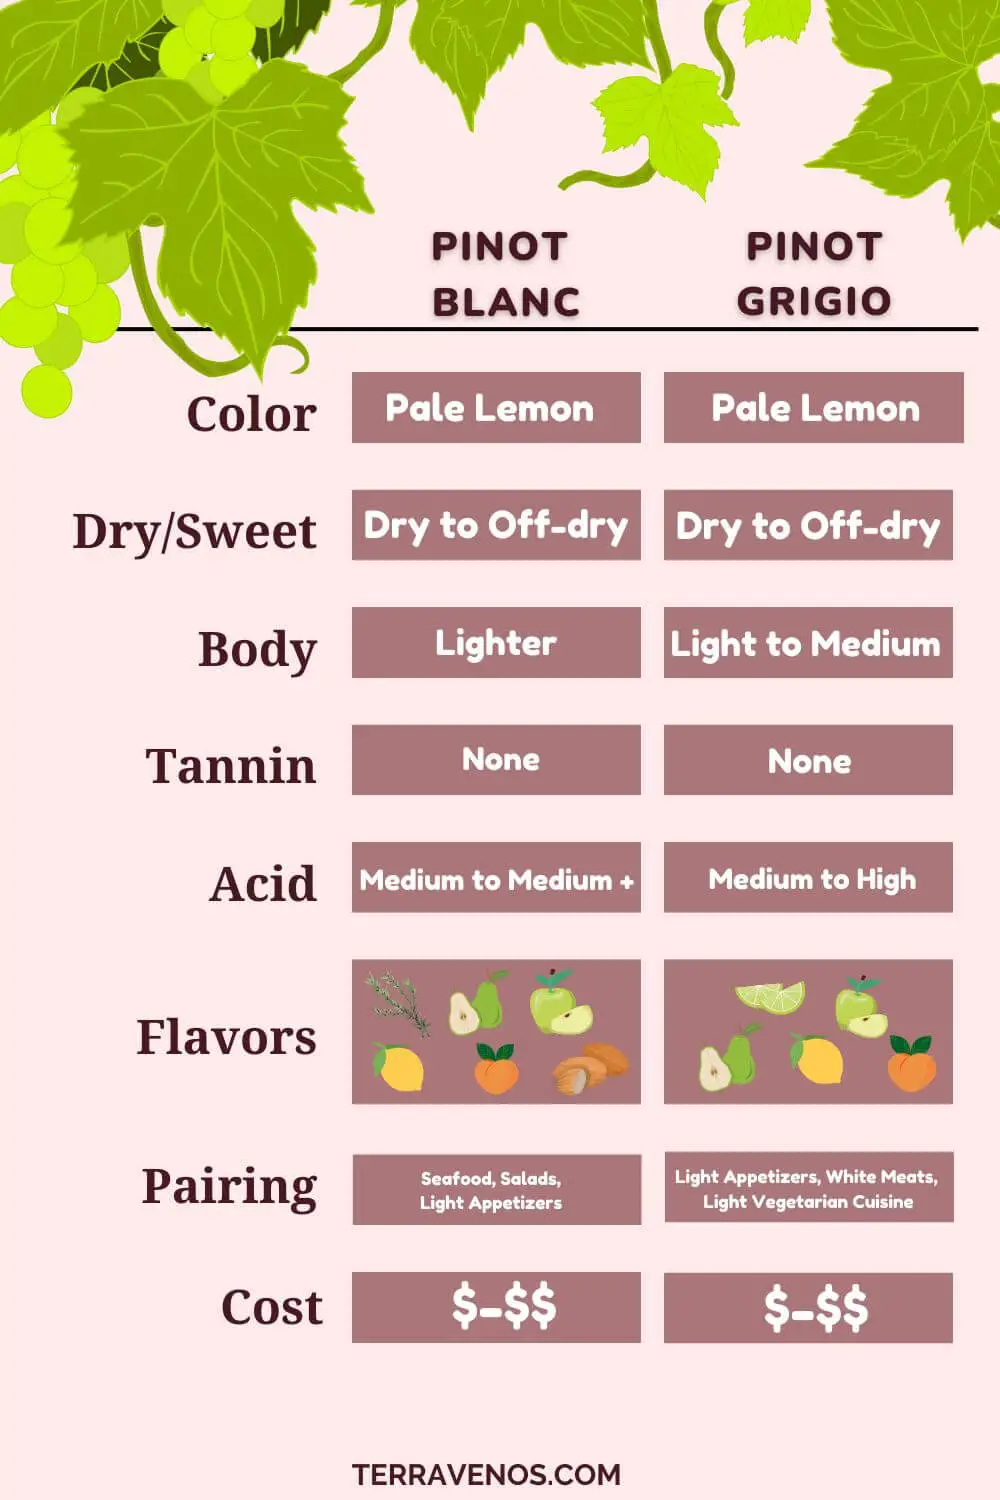 pinot grigio vs pinot blanc comparison chart infographic